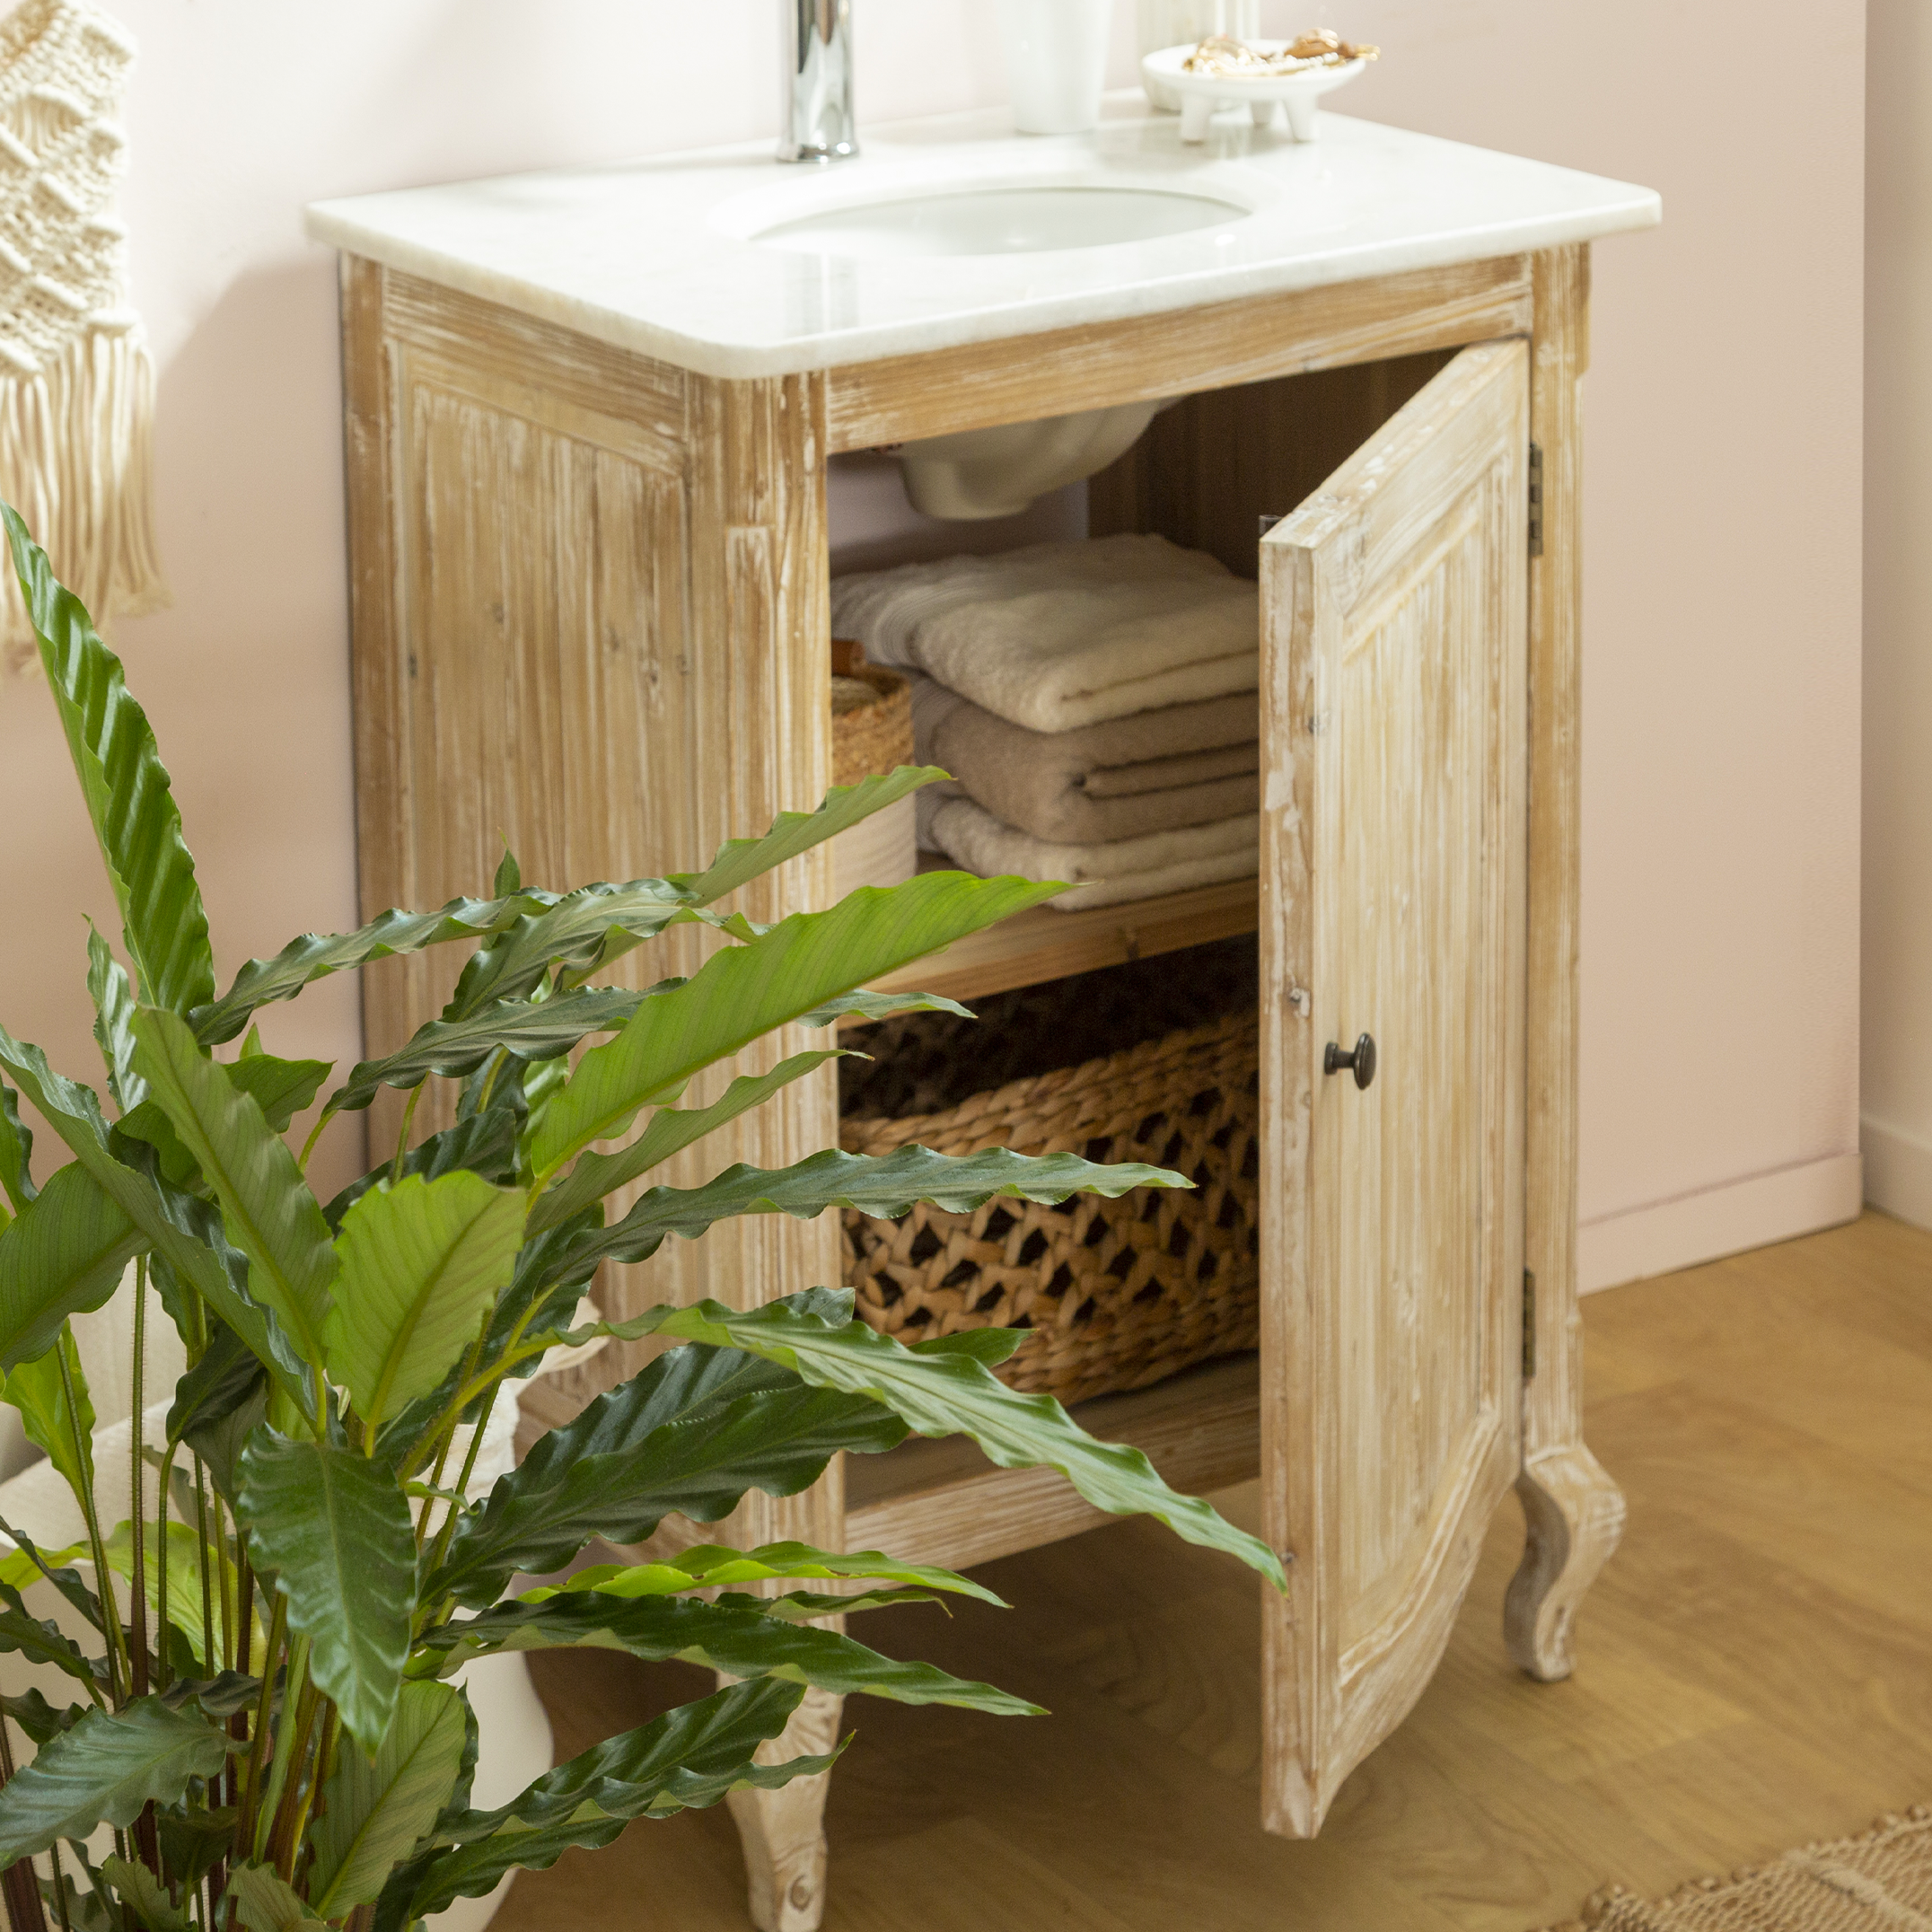 Meuble salle de bain en pin recyclé blanchi et marbre blanc Gemma